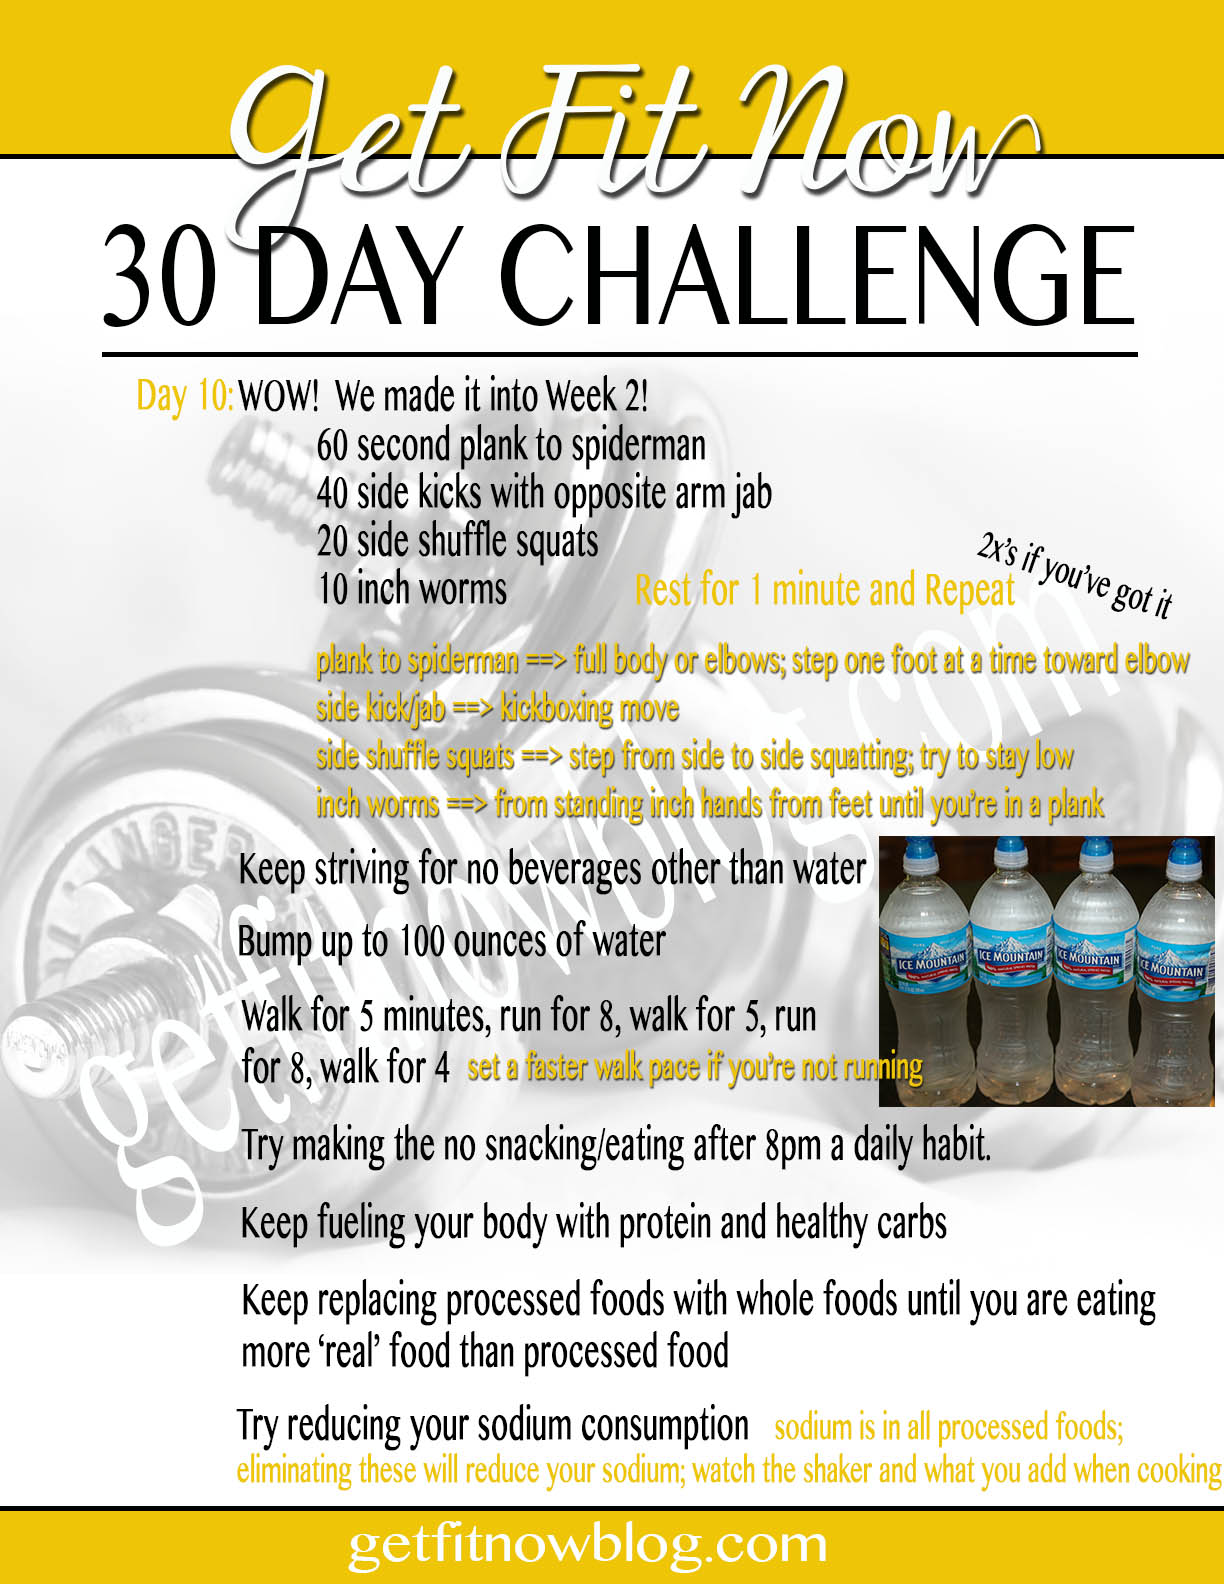 day 10 challenge